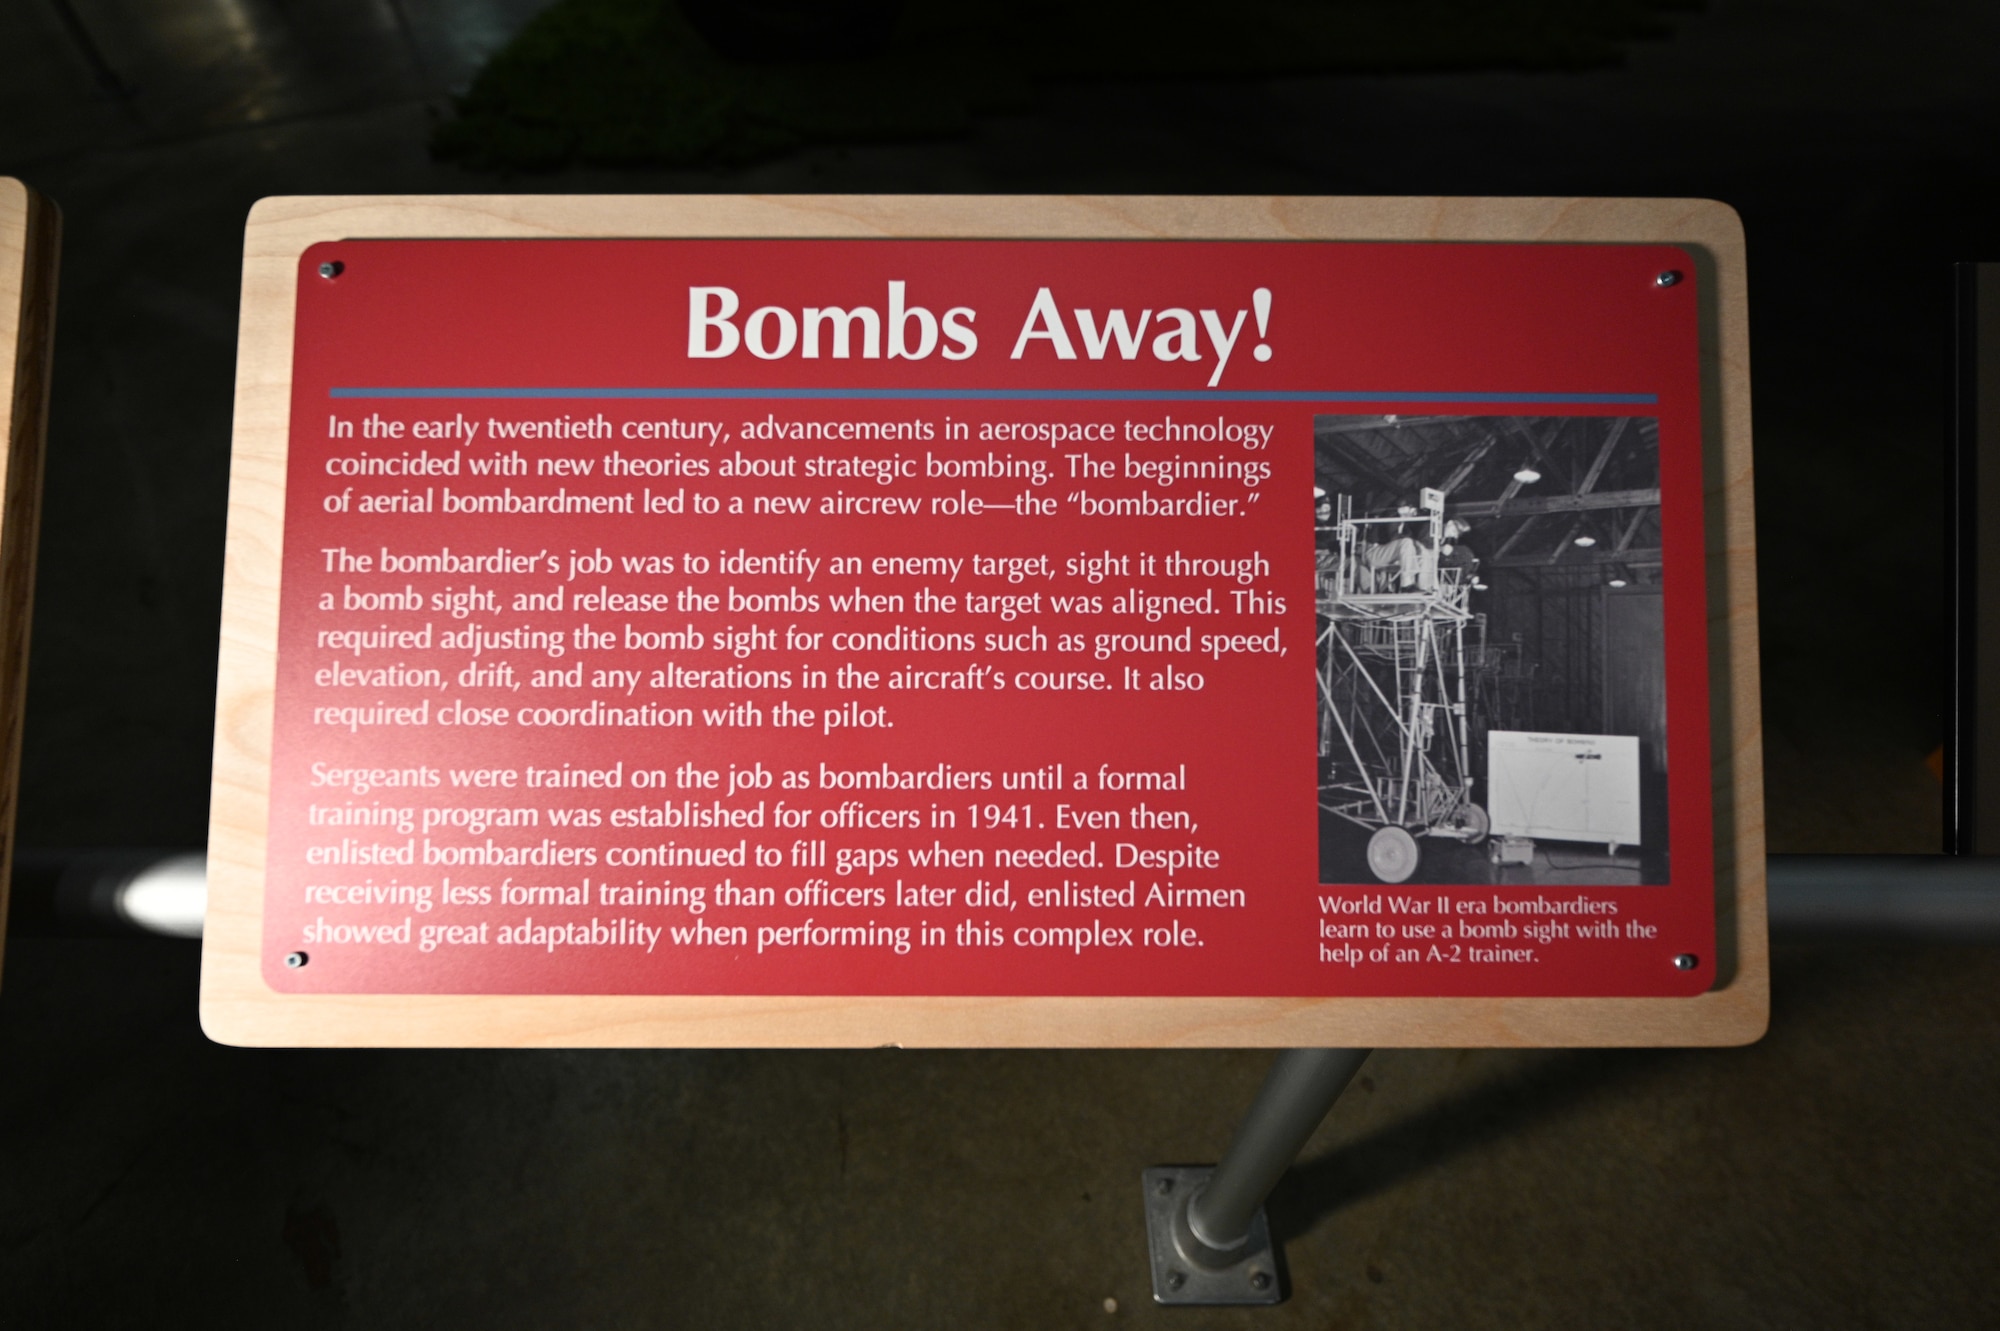 Bombs Away exhibit photos